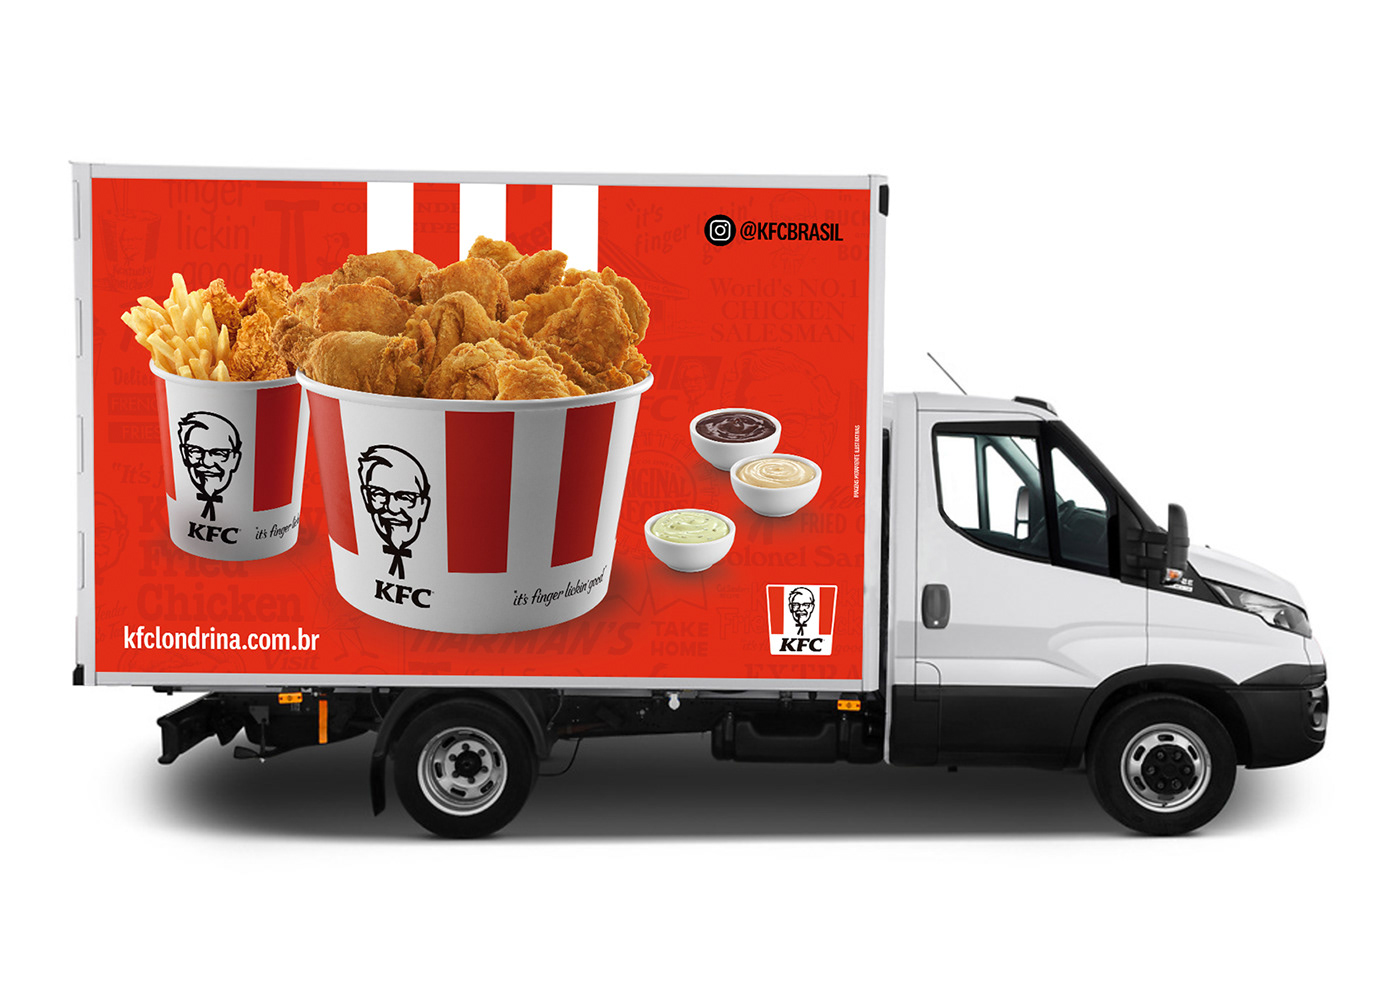 KFC balde londrina maringà Big Box caminhão kfc kfc truck foz do iguaçu